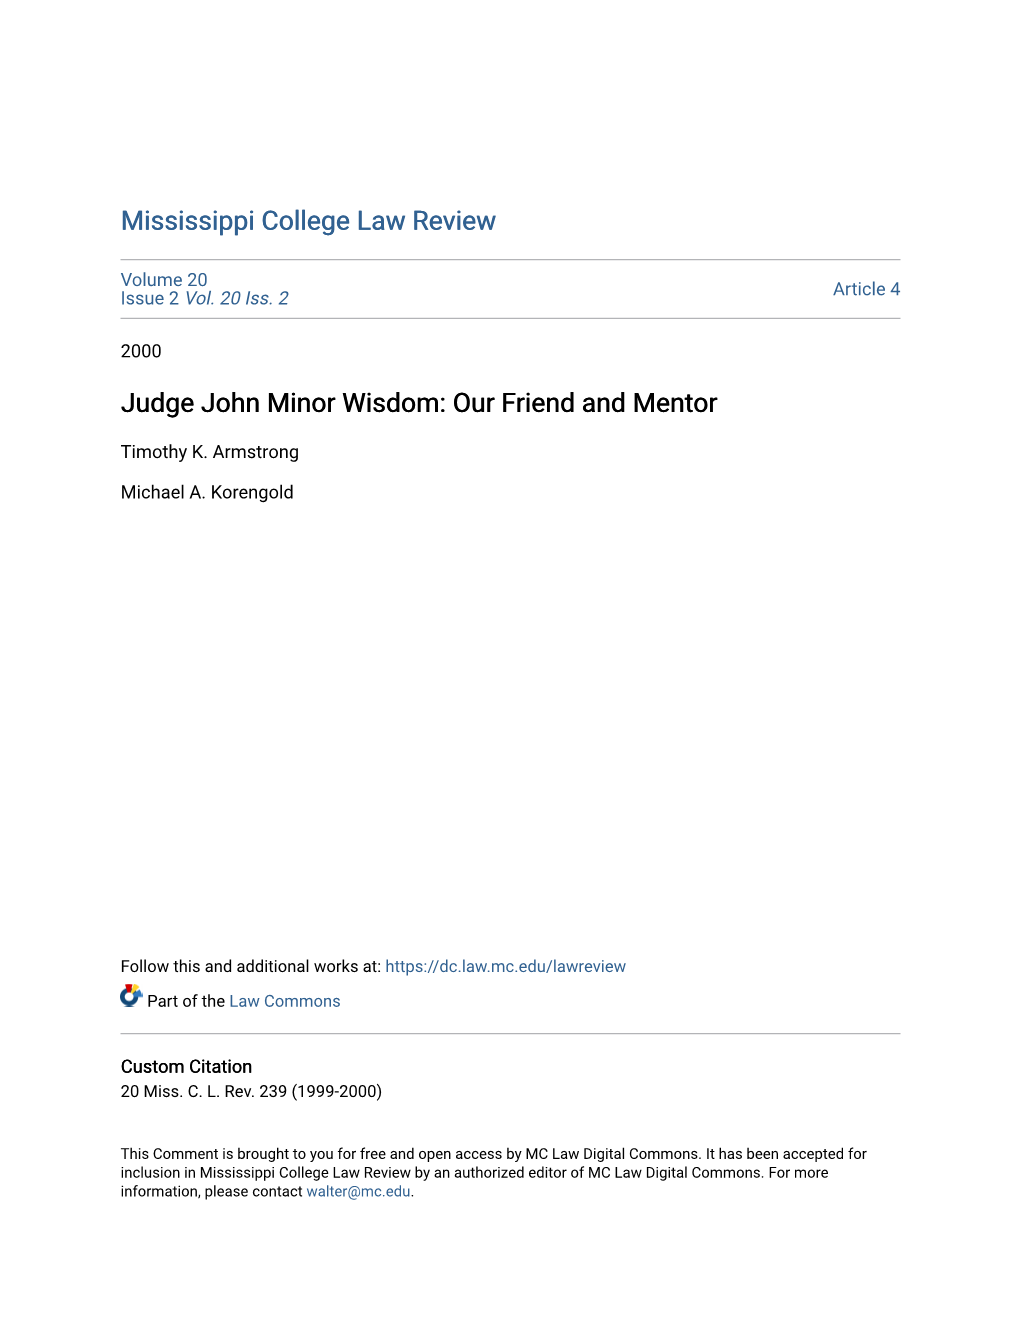 Judge John Minor Wisdom: Our Friend and Mentor